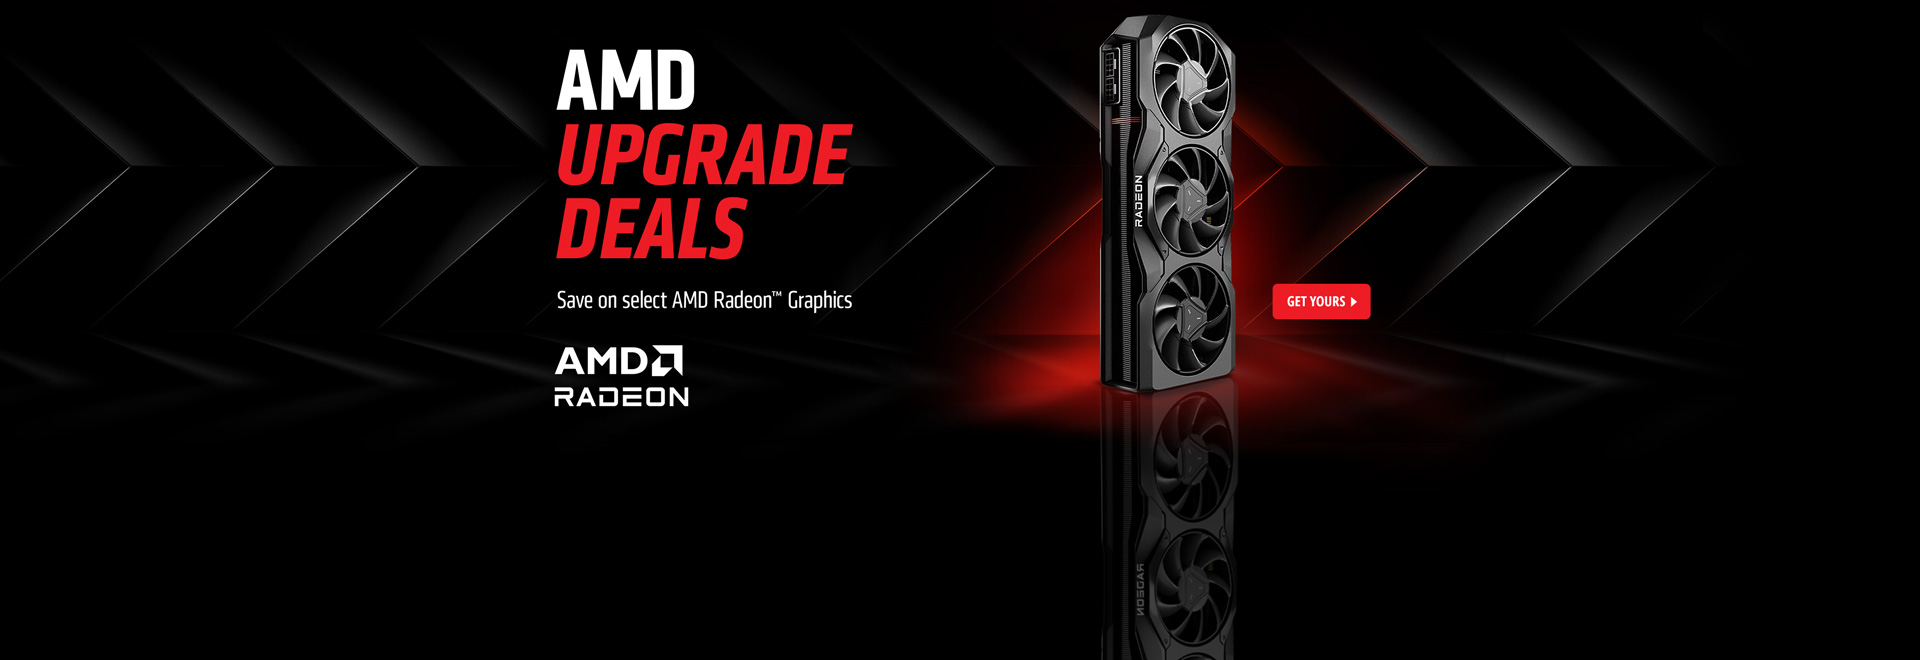 AMD Upgrade Deal